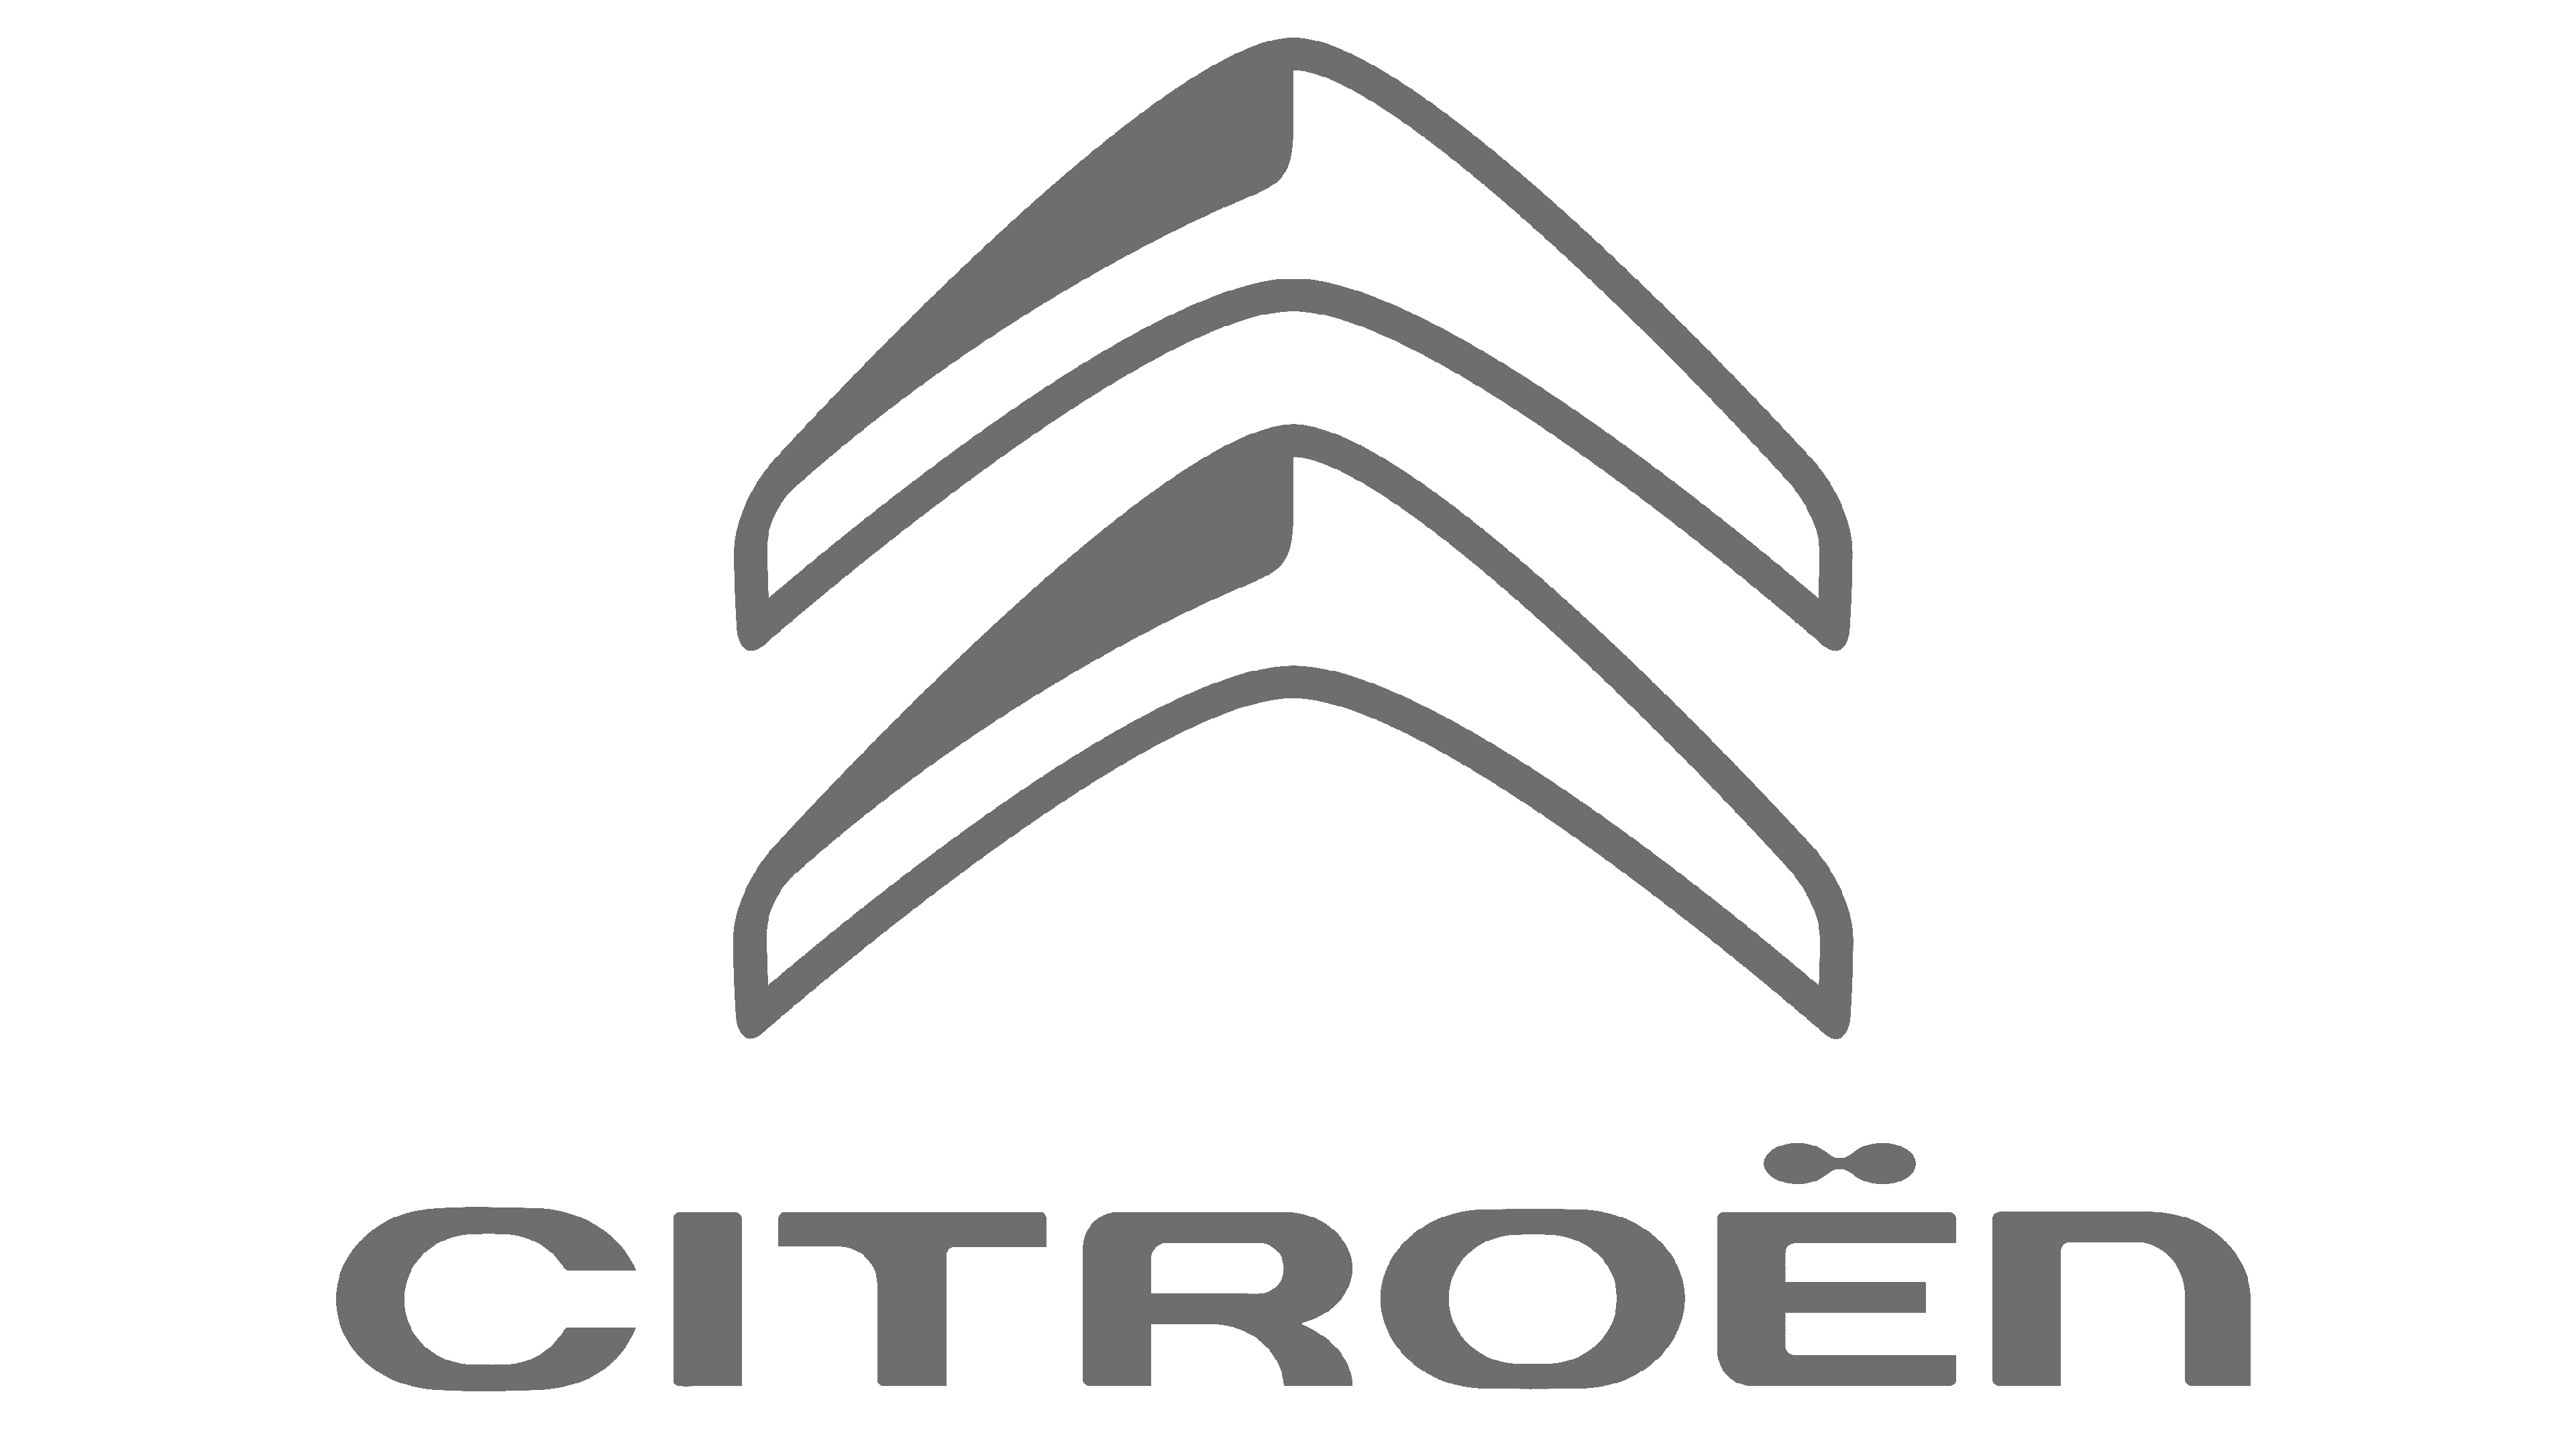 Citroën Logo Meaning and History [Citroën symbol]